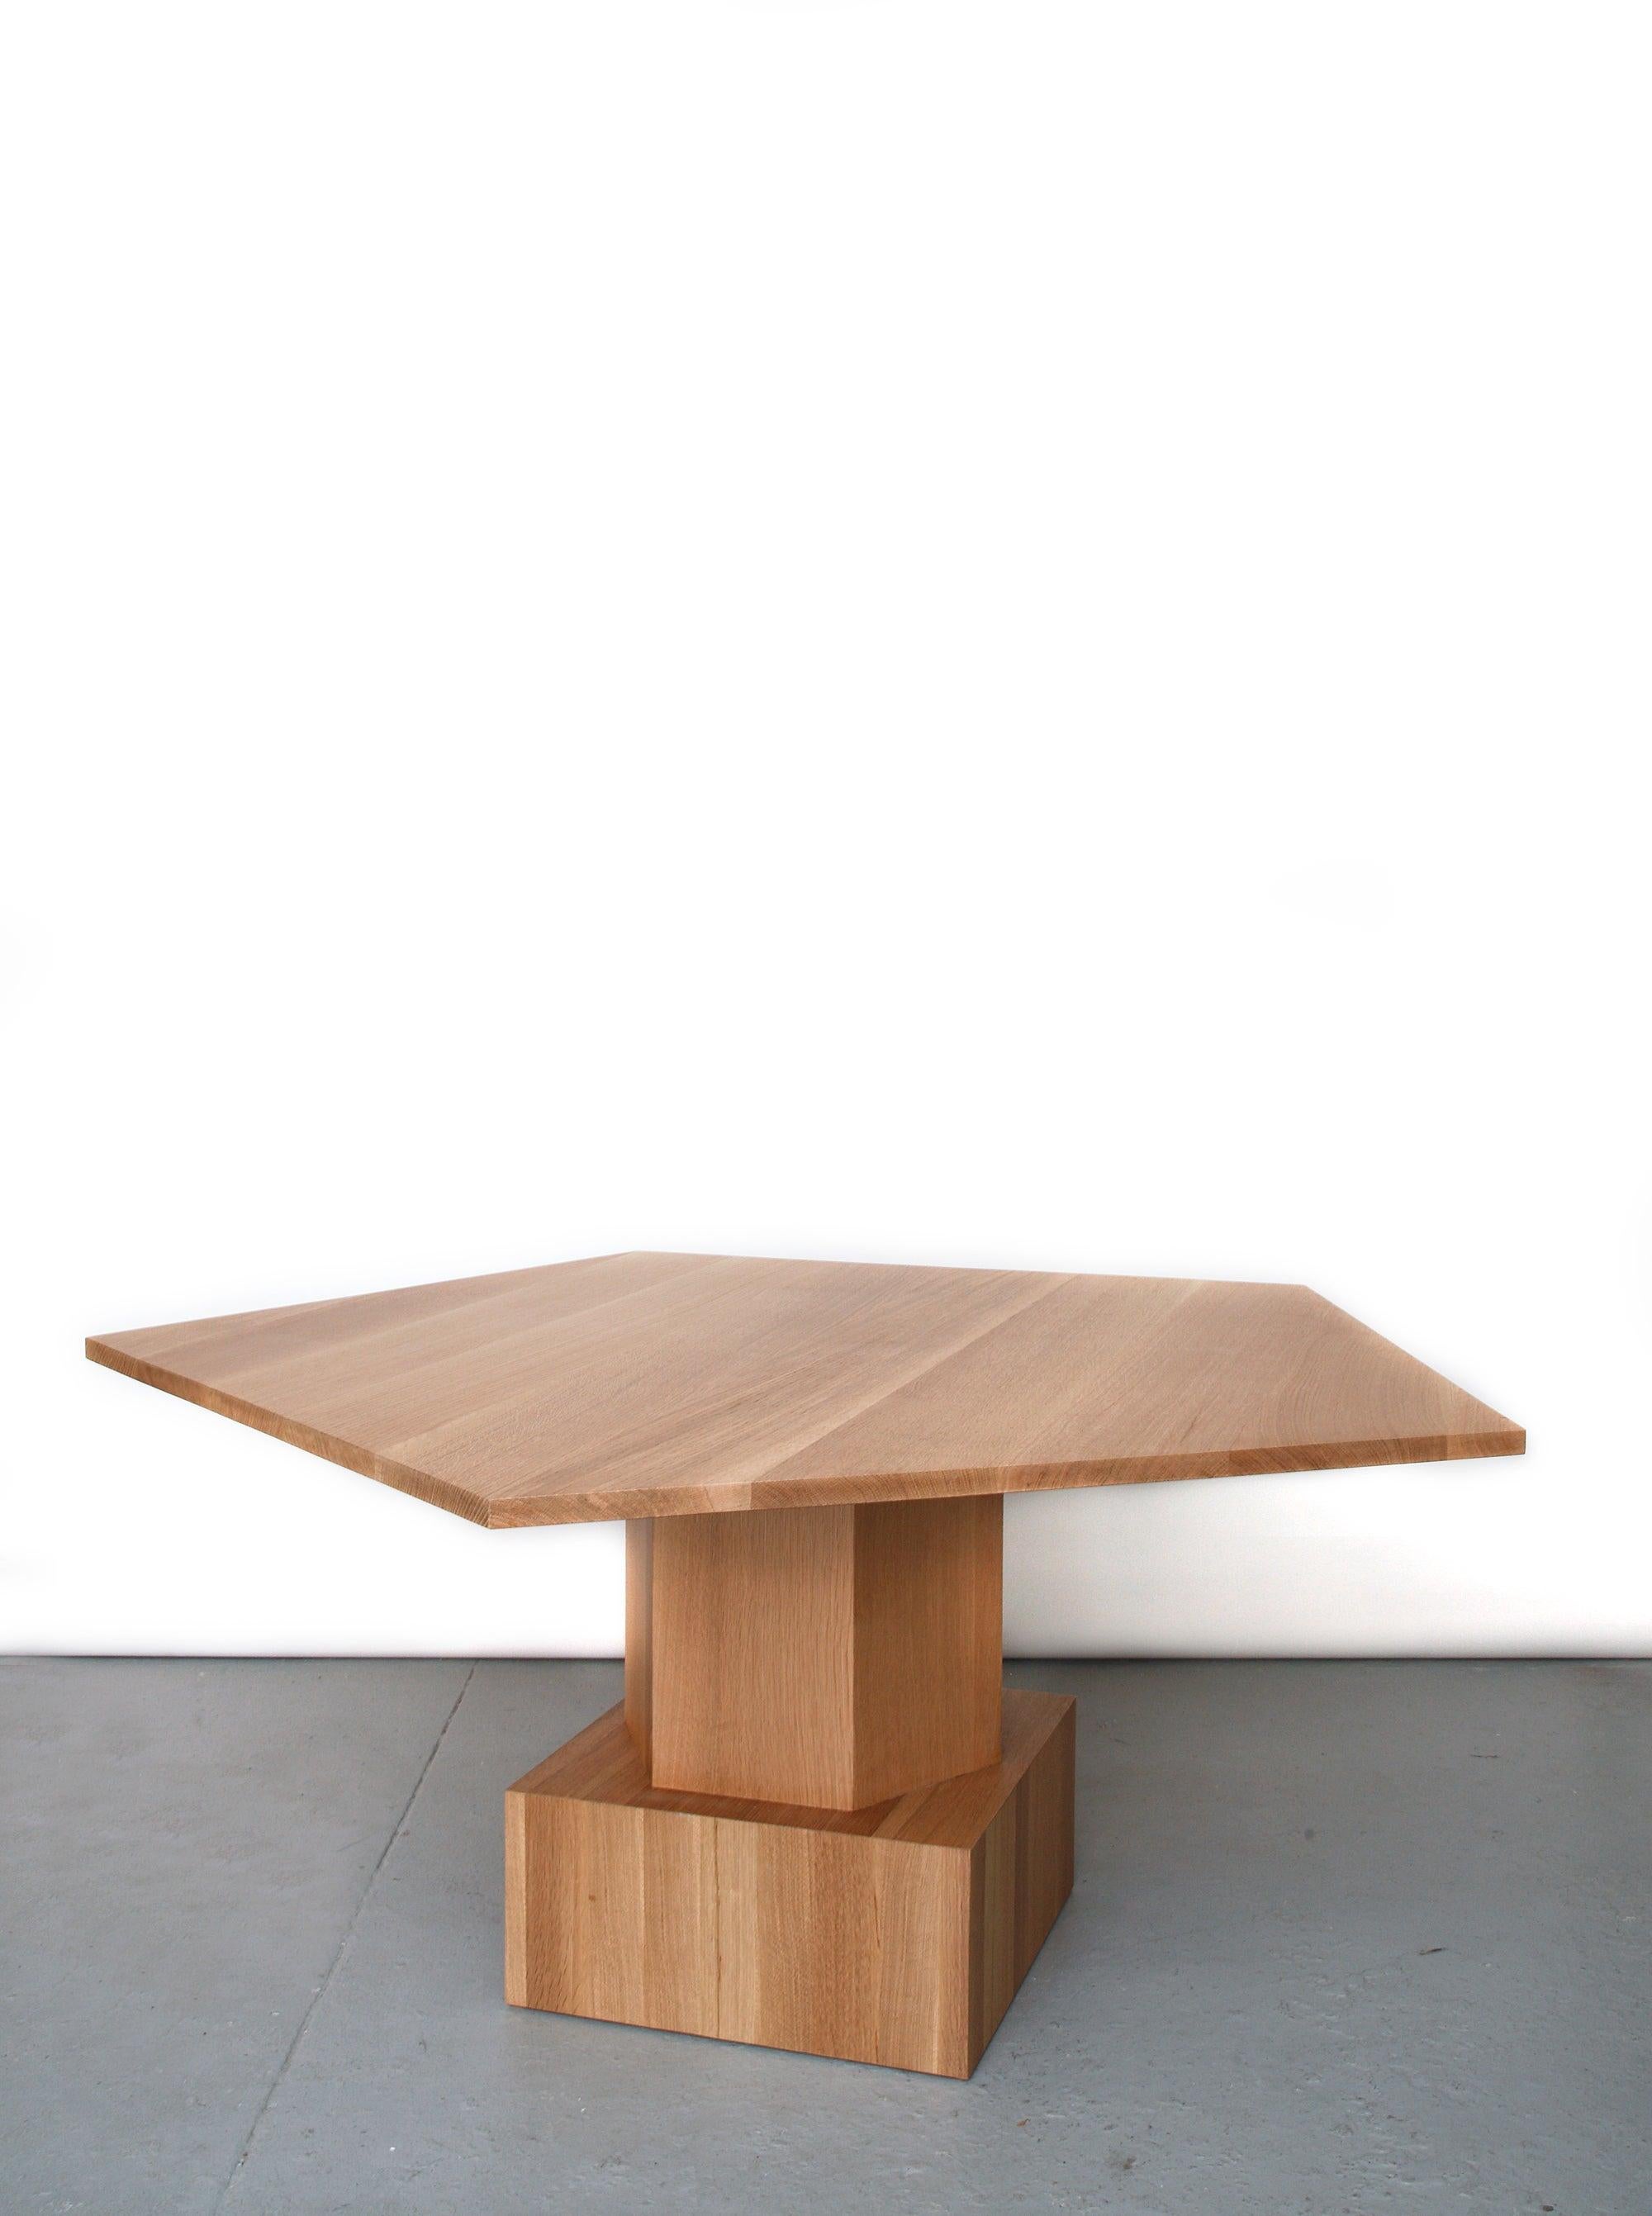 center table design